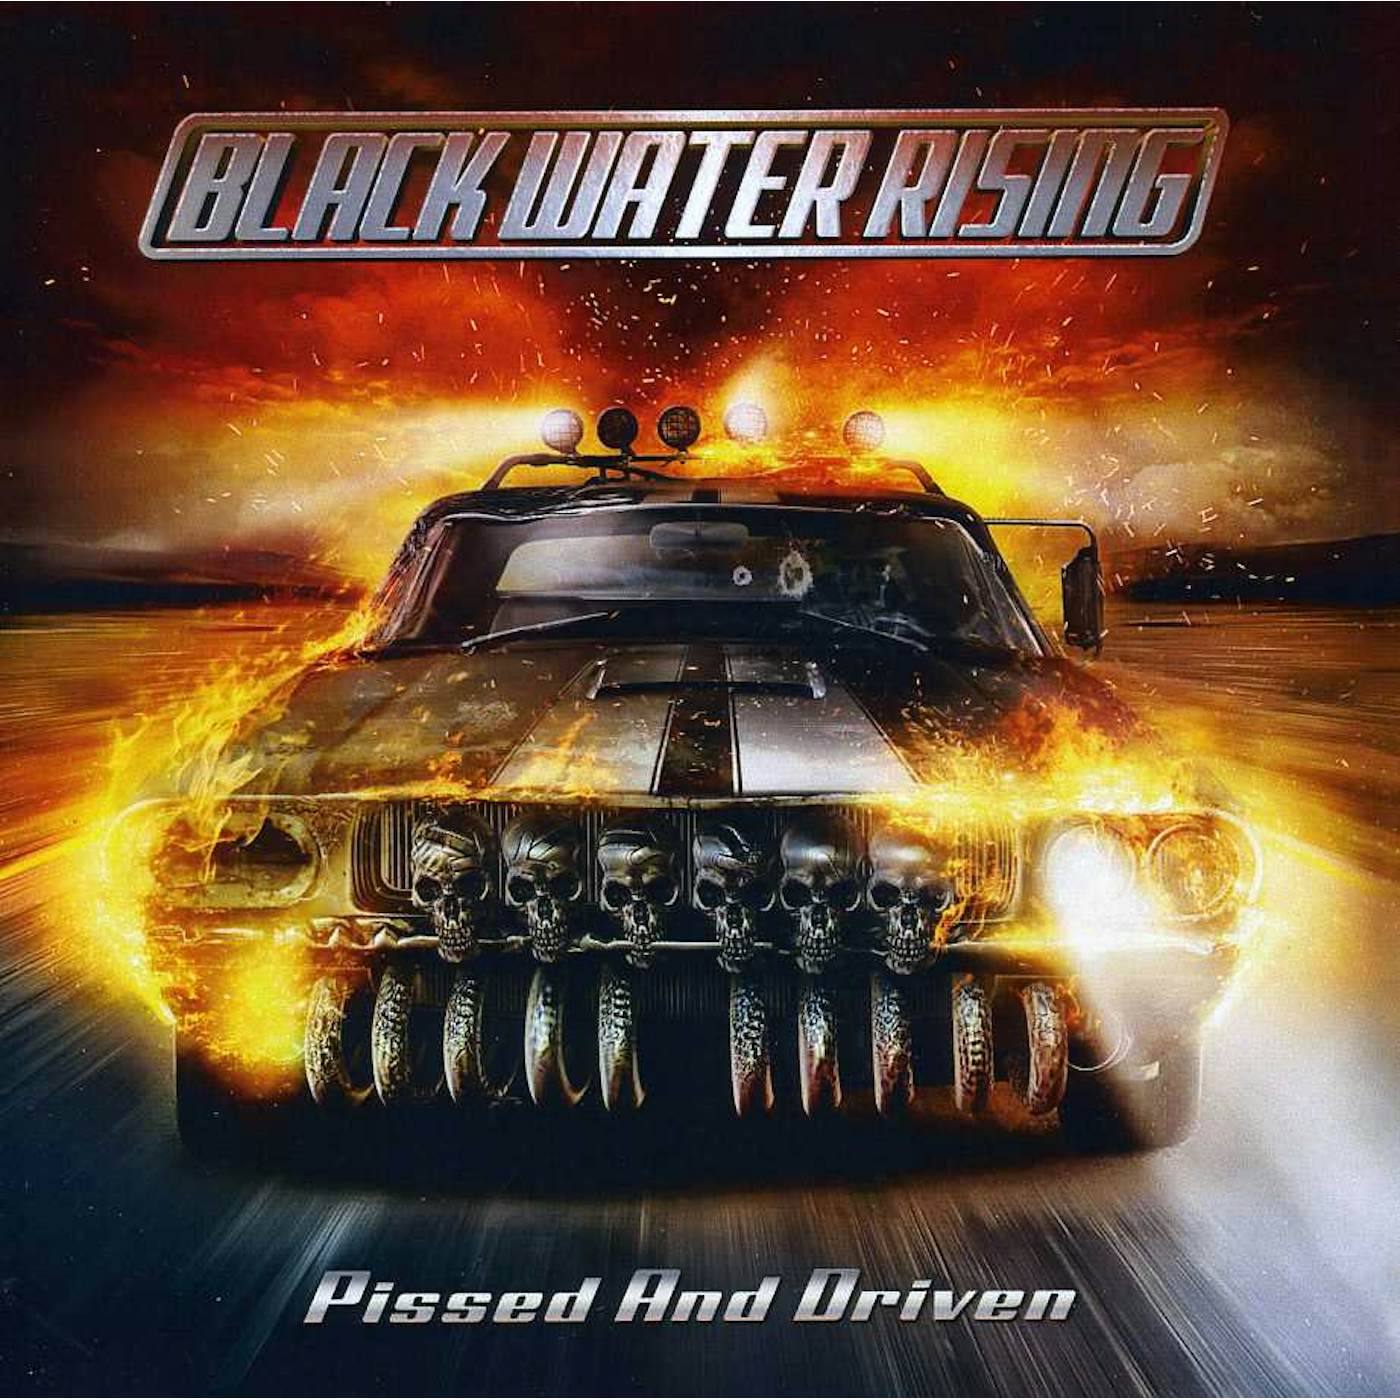 Black Water Rising PISSED & DRIVEN CD